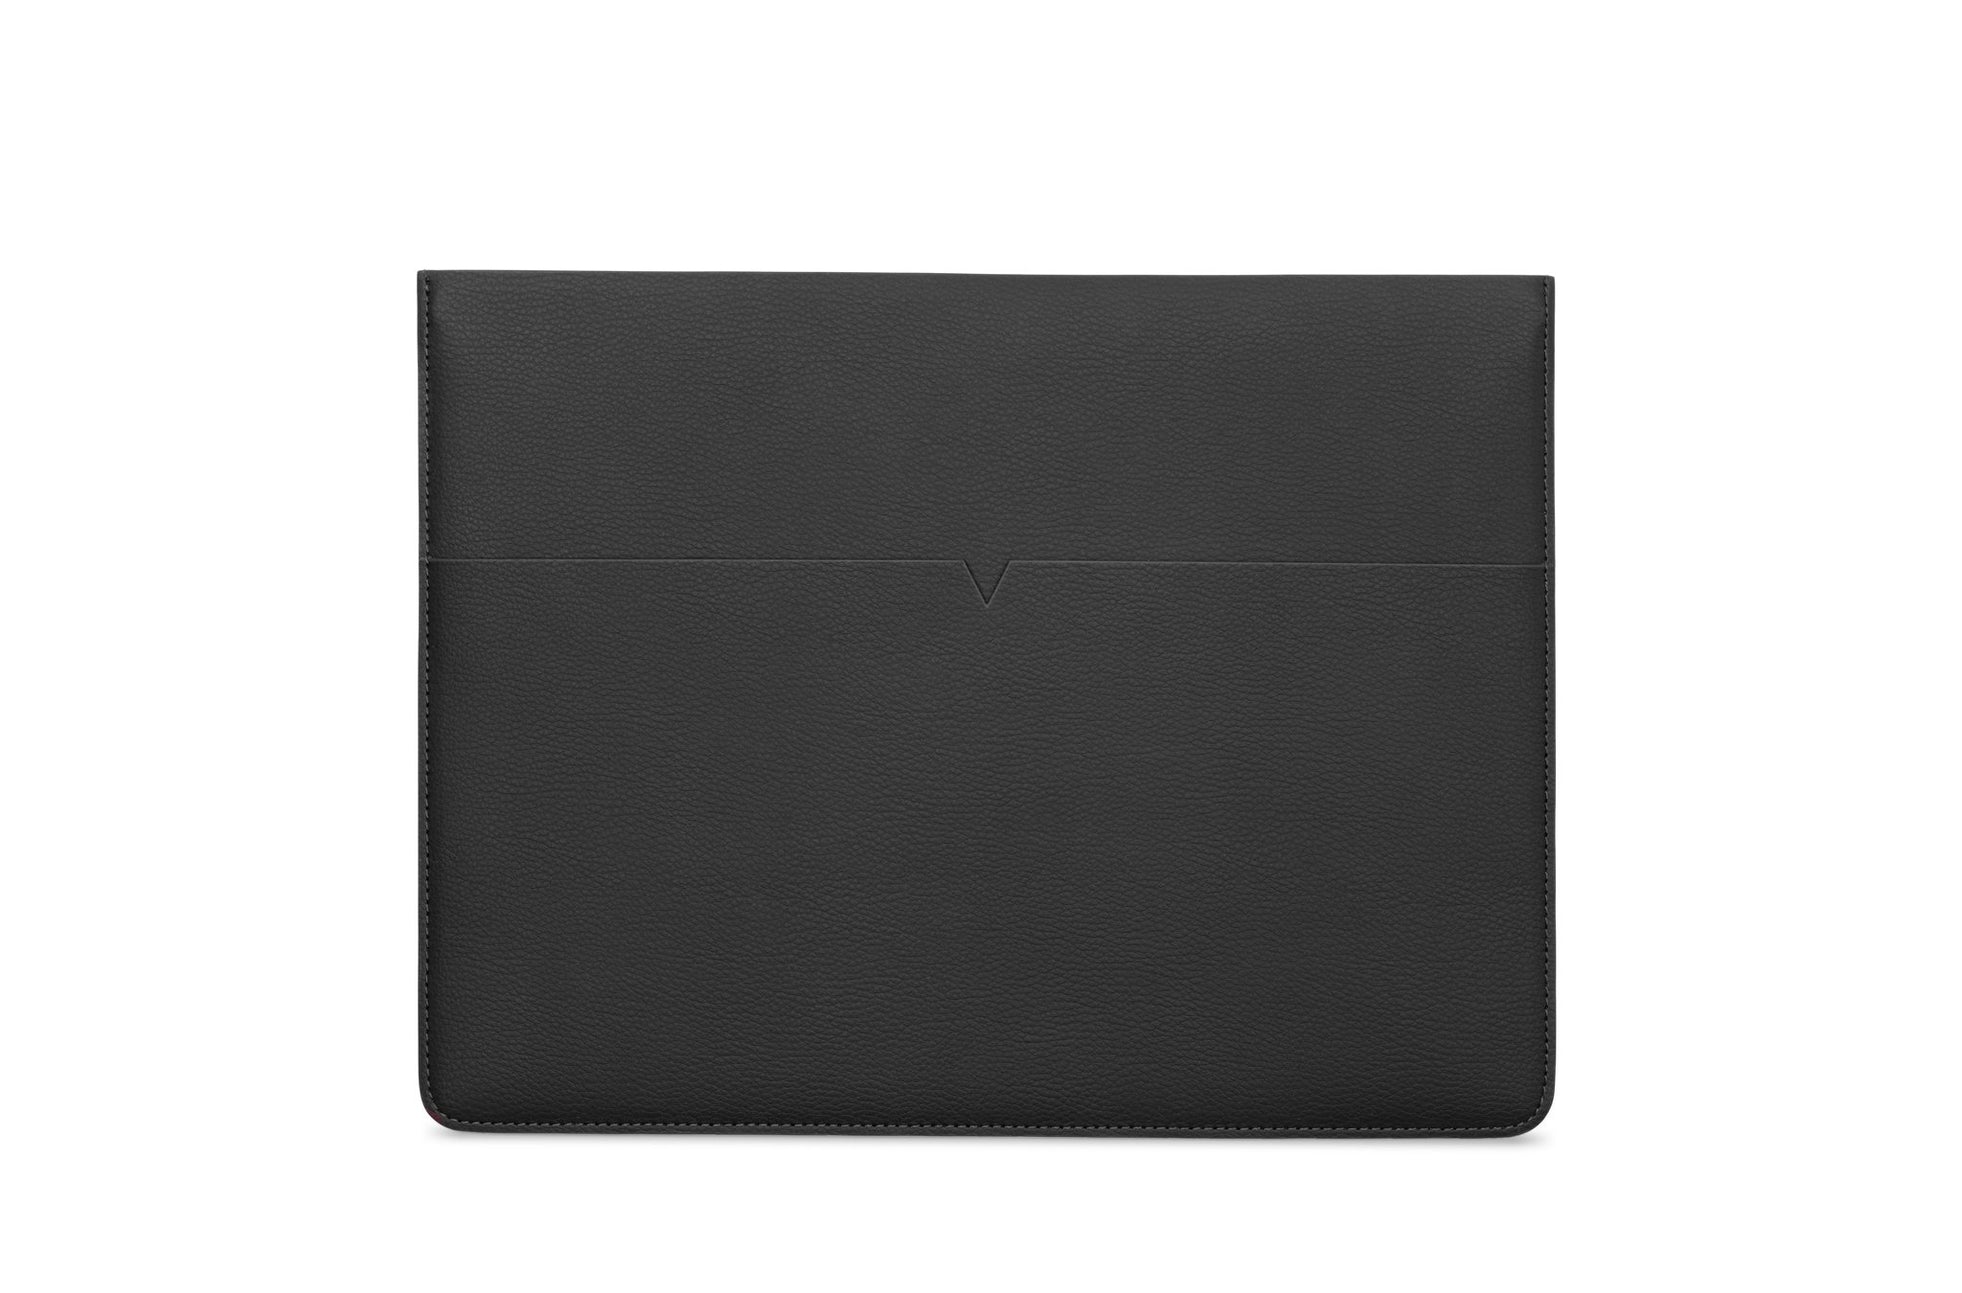 The MacBook Sleeve 13-inch - Sample Sale in Technik in Black image 1